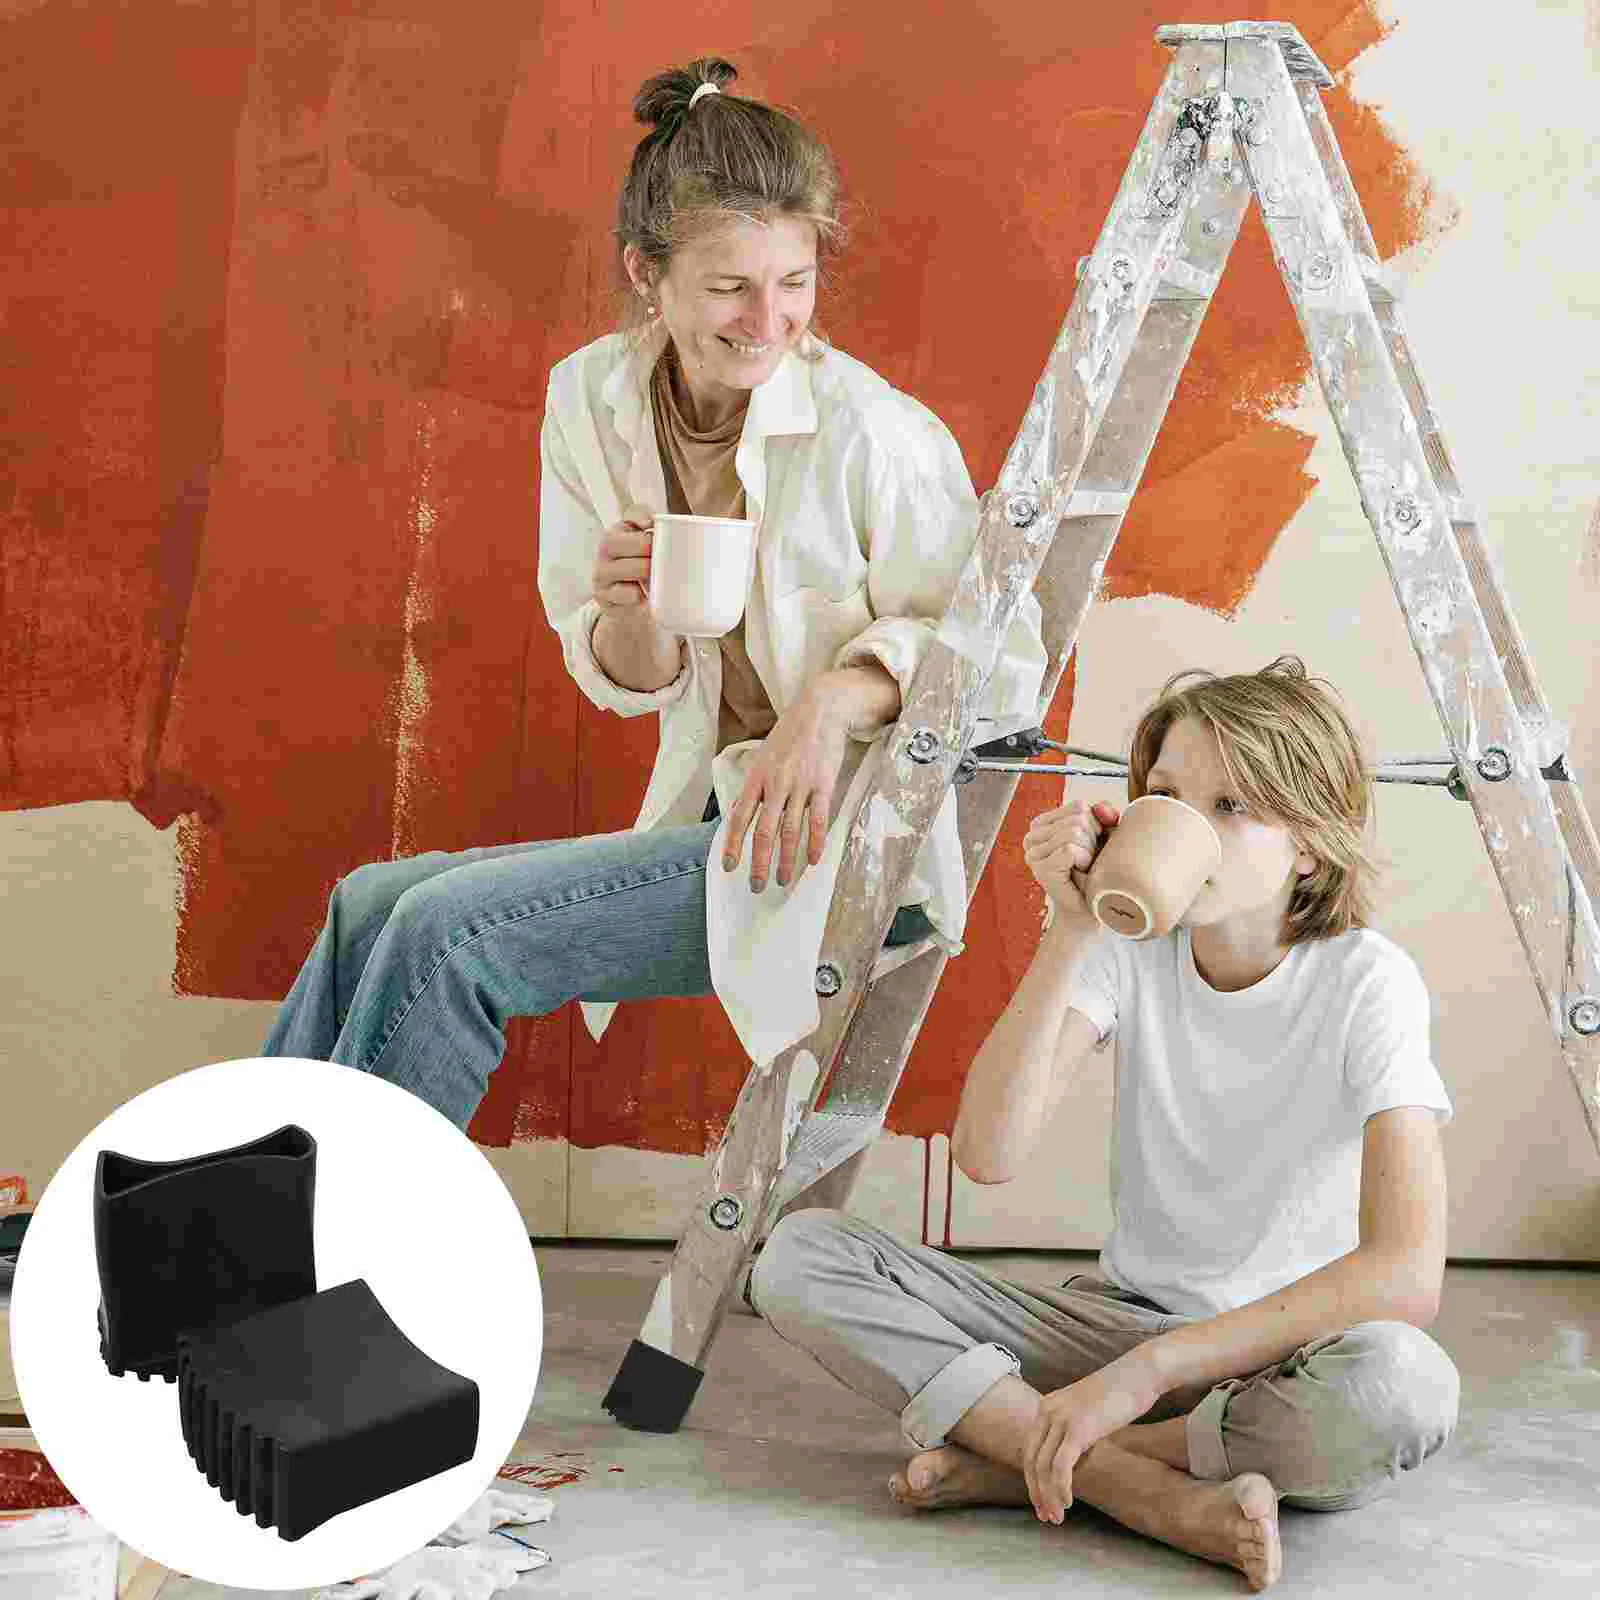 

2 Pcs Plastic Chairs Herringbone Ladder Anti- Mat Safe Pads 7X6.5X3cm Non-skid Black Rubber Feet Accessories